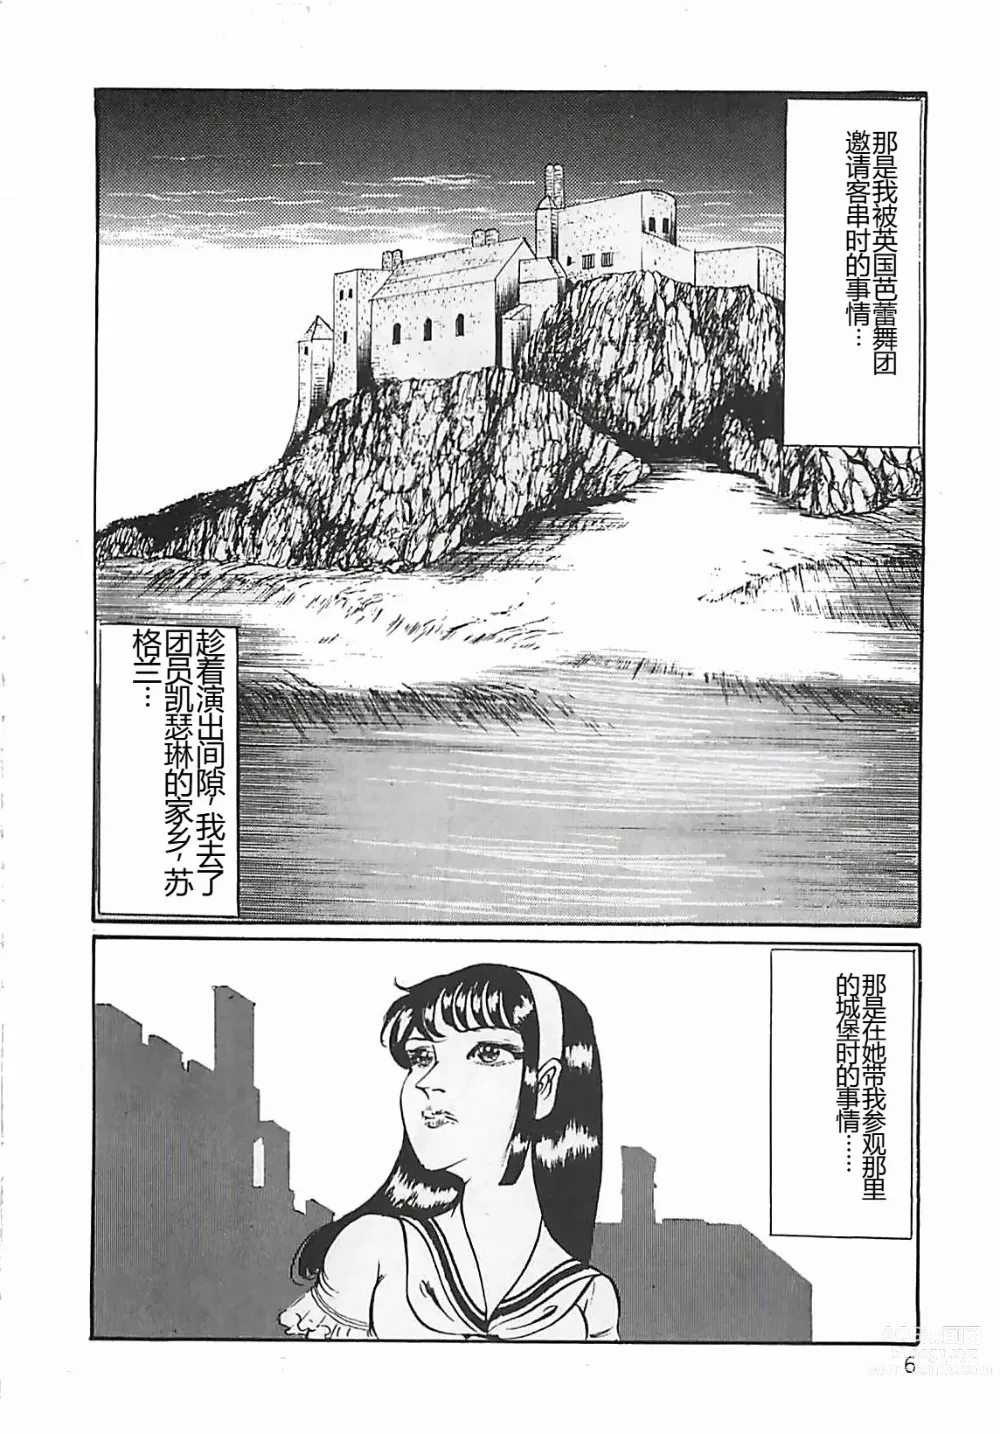 Page 7 of manga Chi no Butou